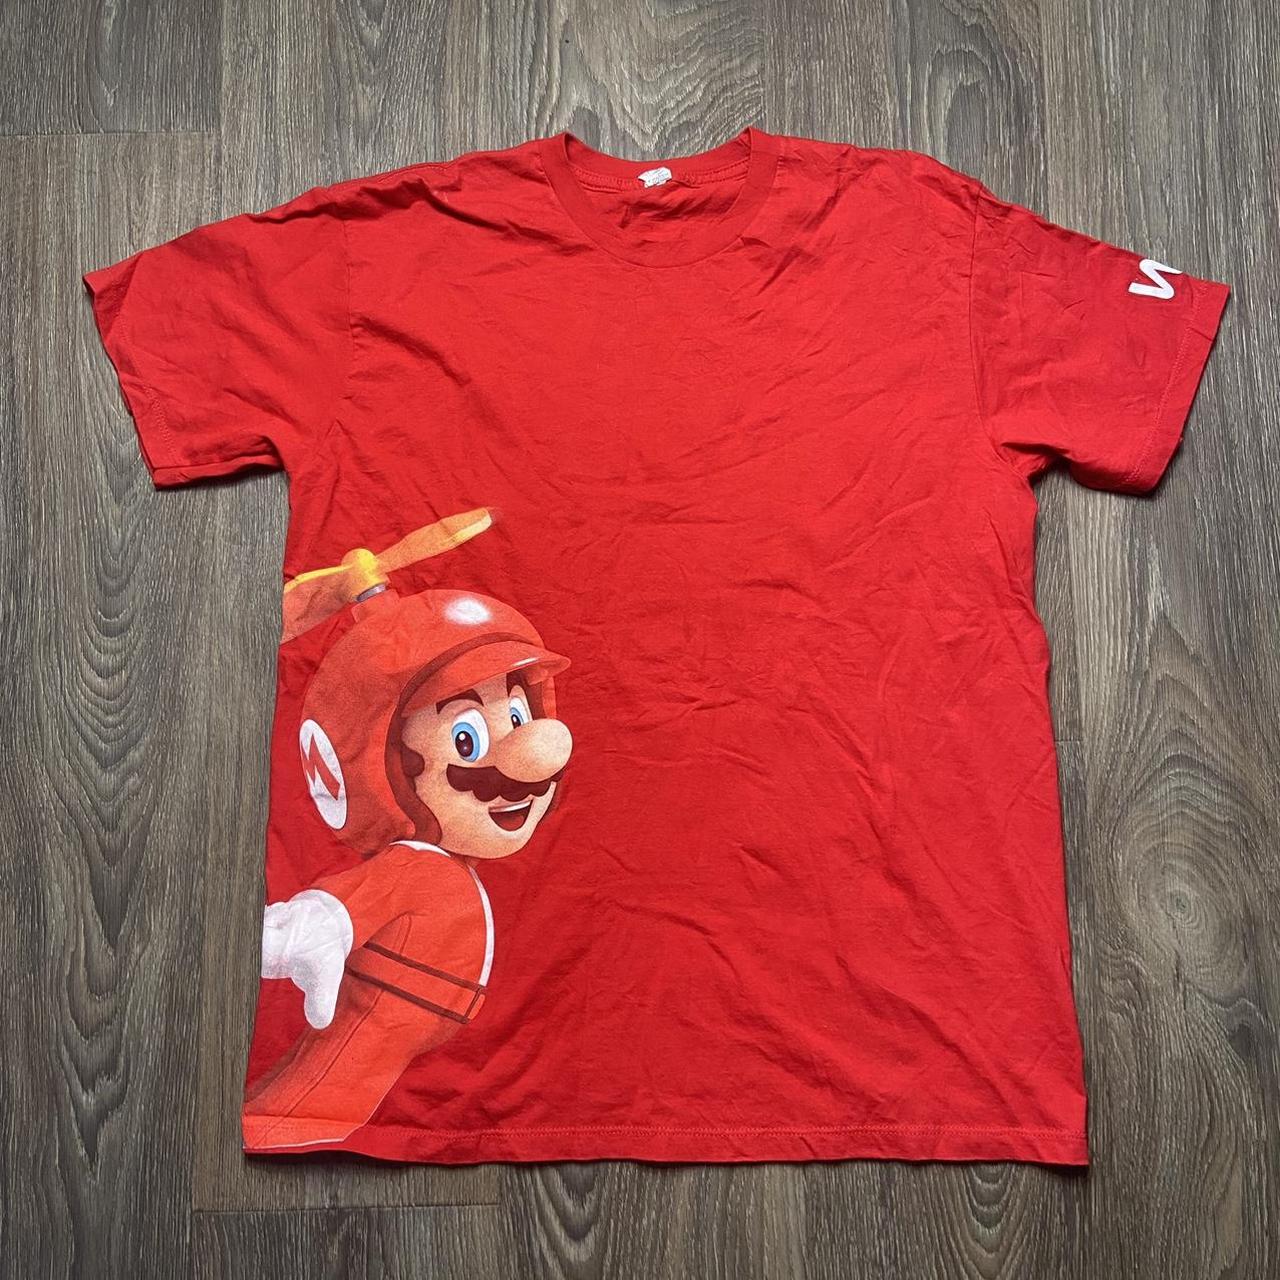 Super Mario bros inspired T-shirt -  Portugal